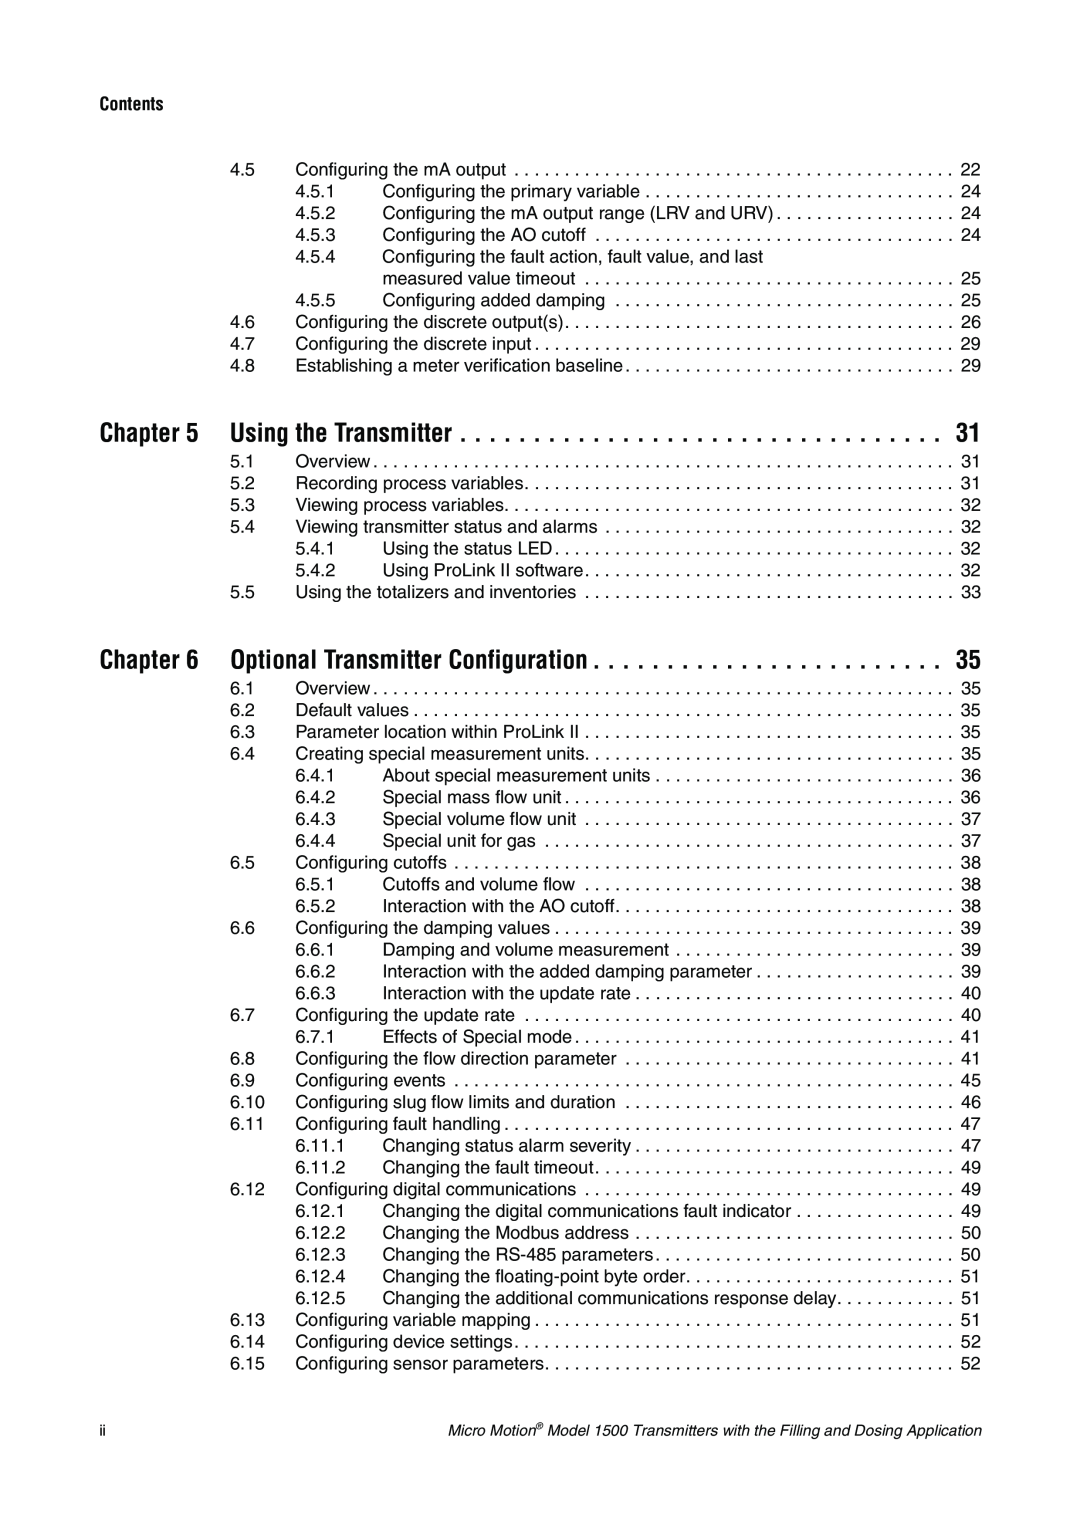 Emerson Process Management 1500 manual Optional Transmitter Configuration, Contents 